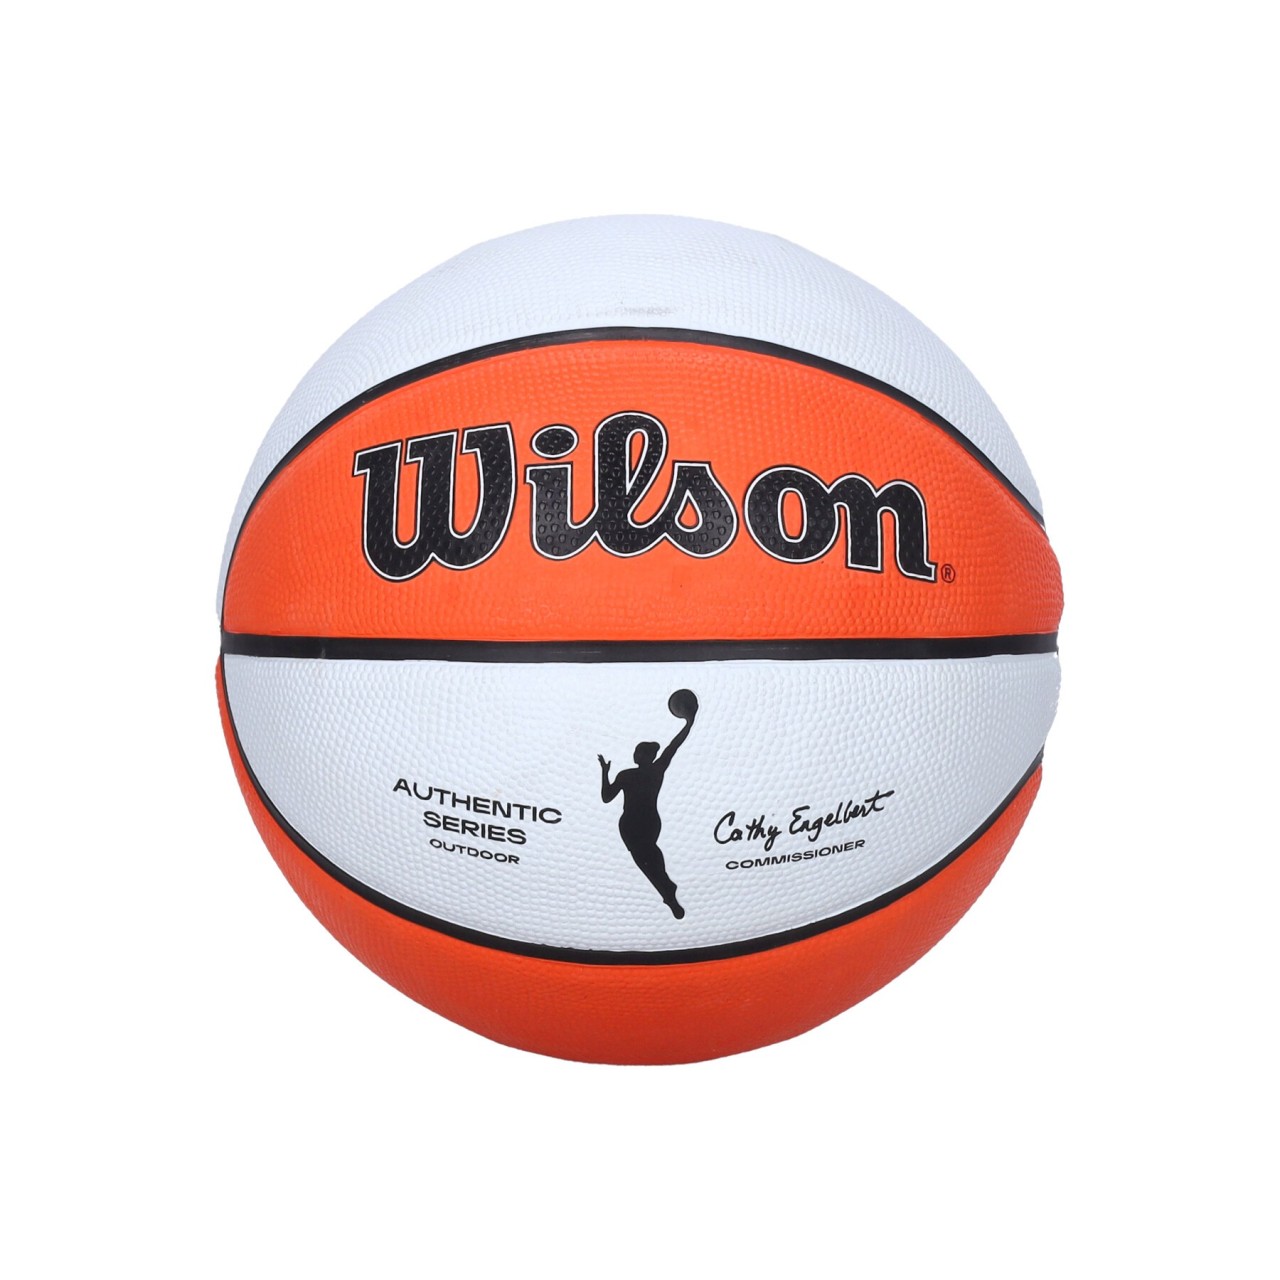 WILSON TEAM NBA AUTHENTIC SERIES OUTDOOR BASKETBALL SIZE 6 WTB5200XB06